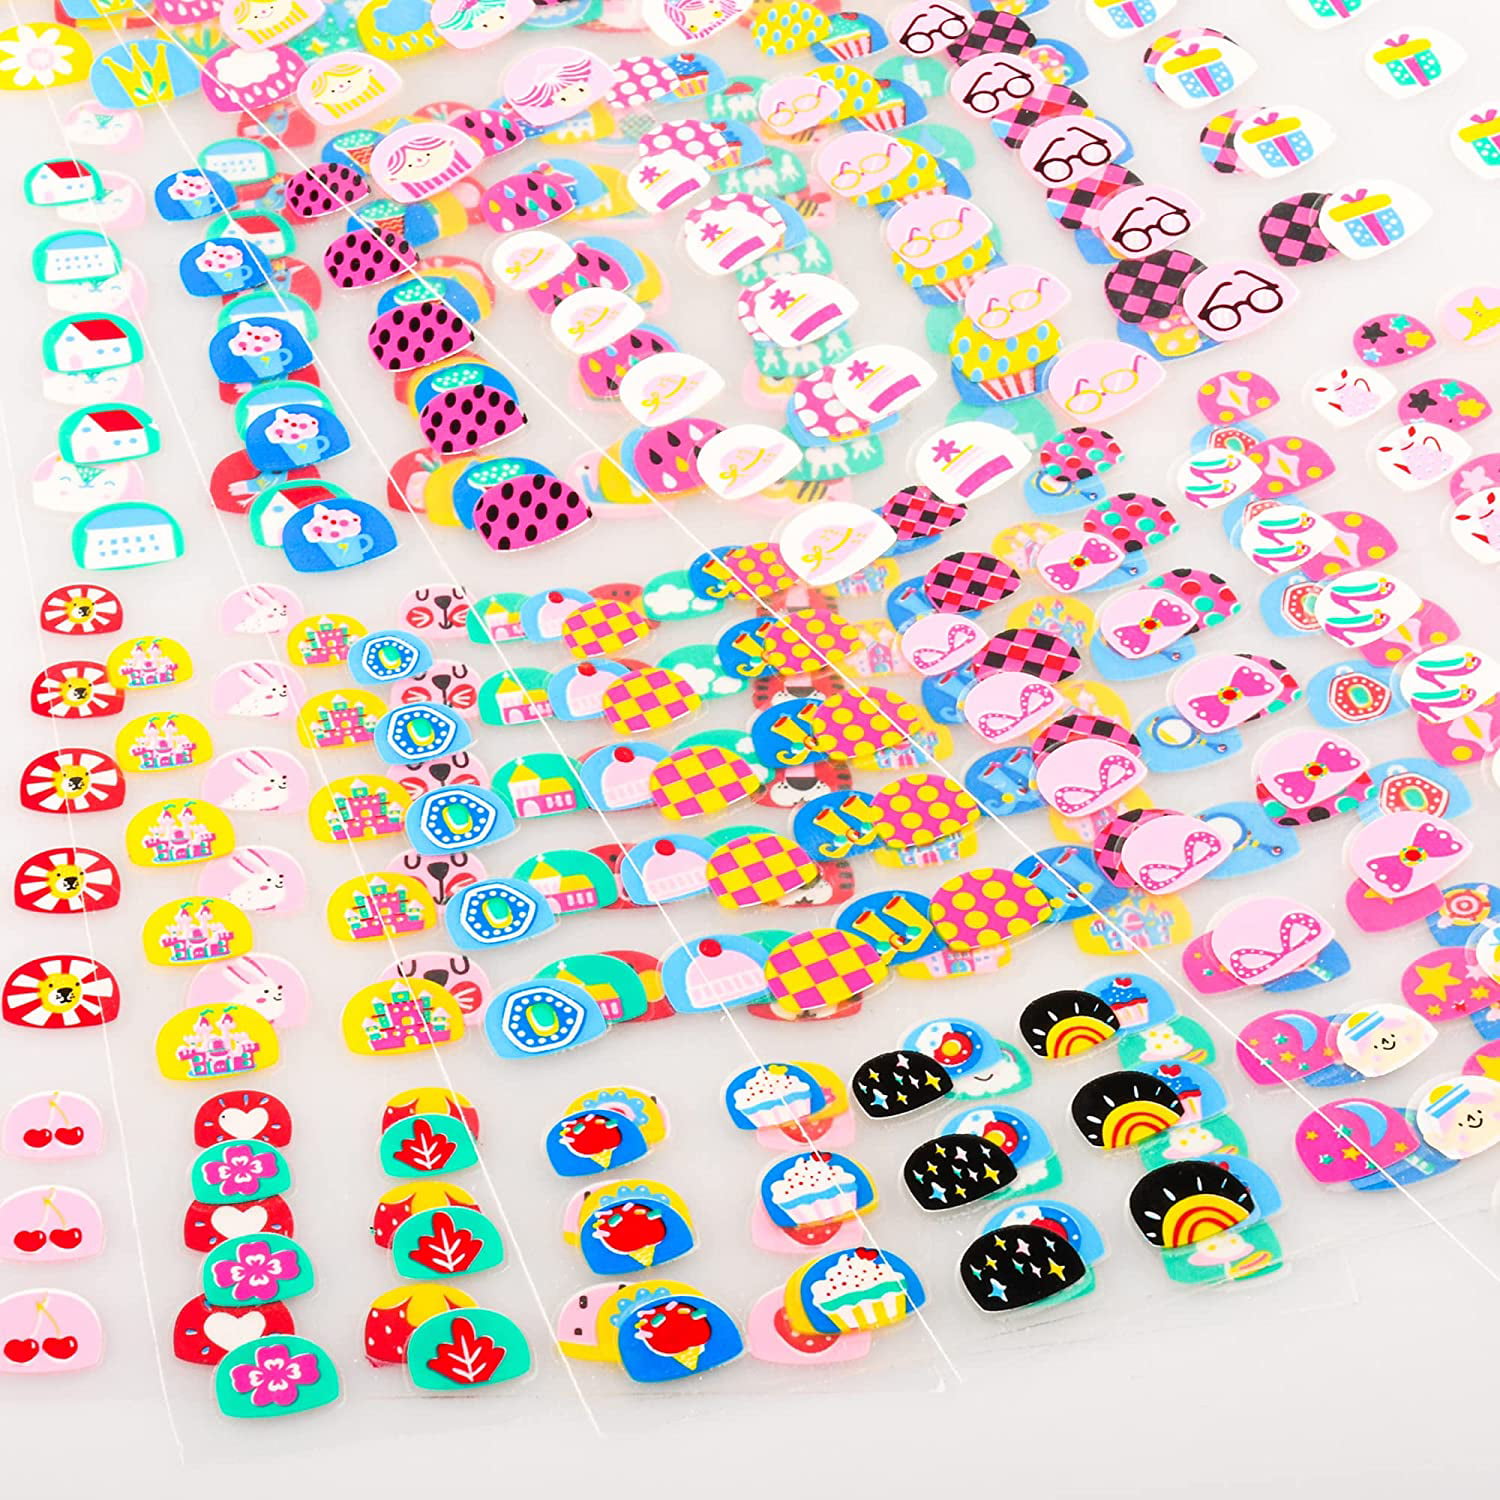 360PCS Sticker Earrings for Girls, Stick on Earrings for Little Girls, 3D  Self-Adhesive Glitter Craft Crystal Stickers